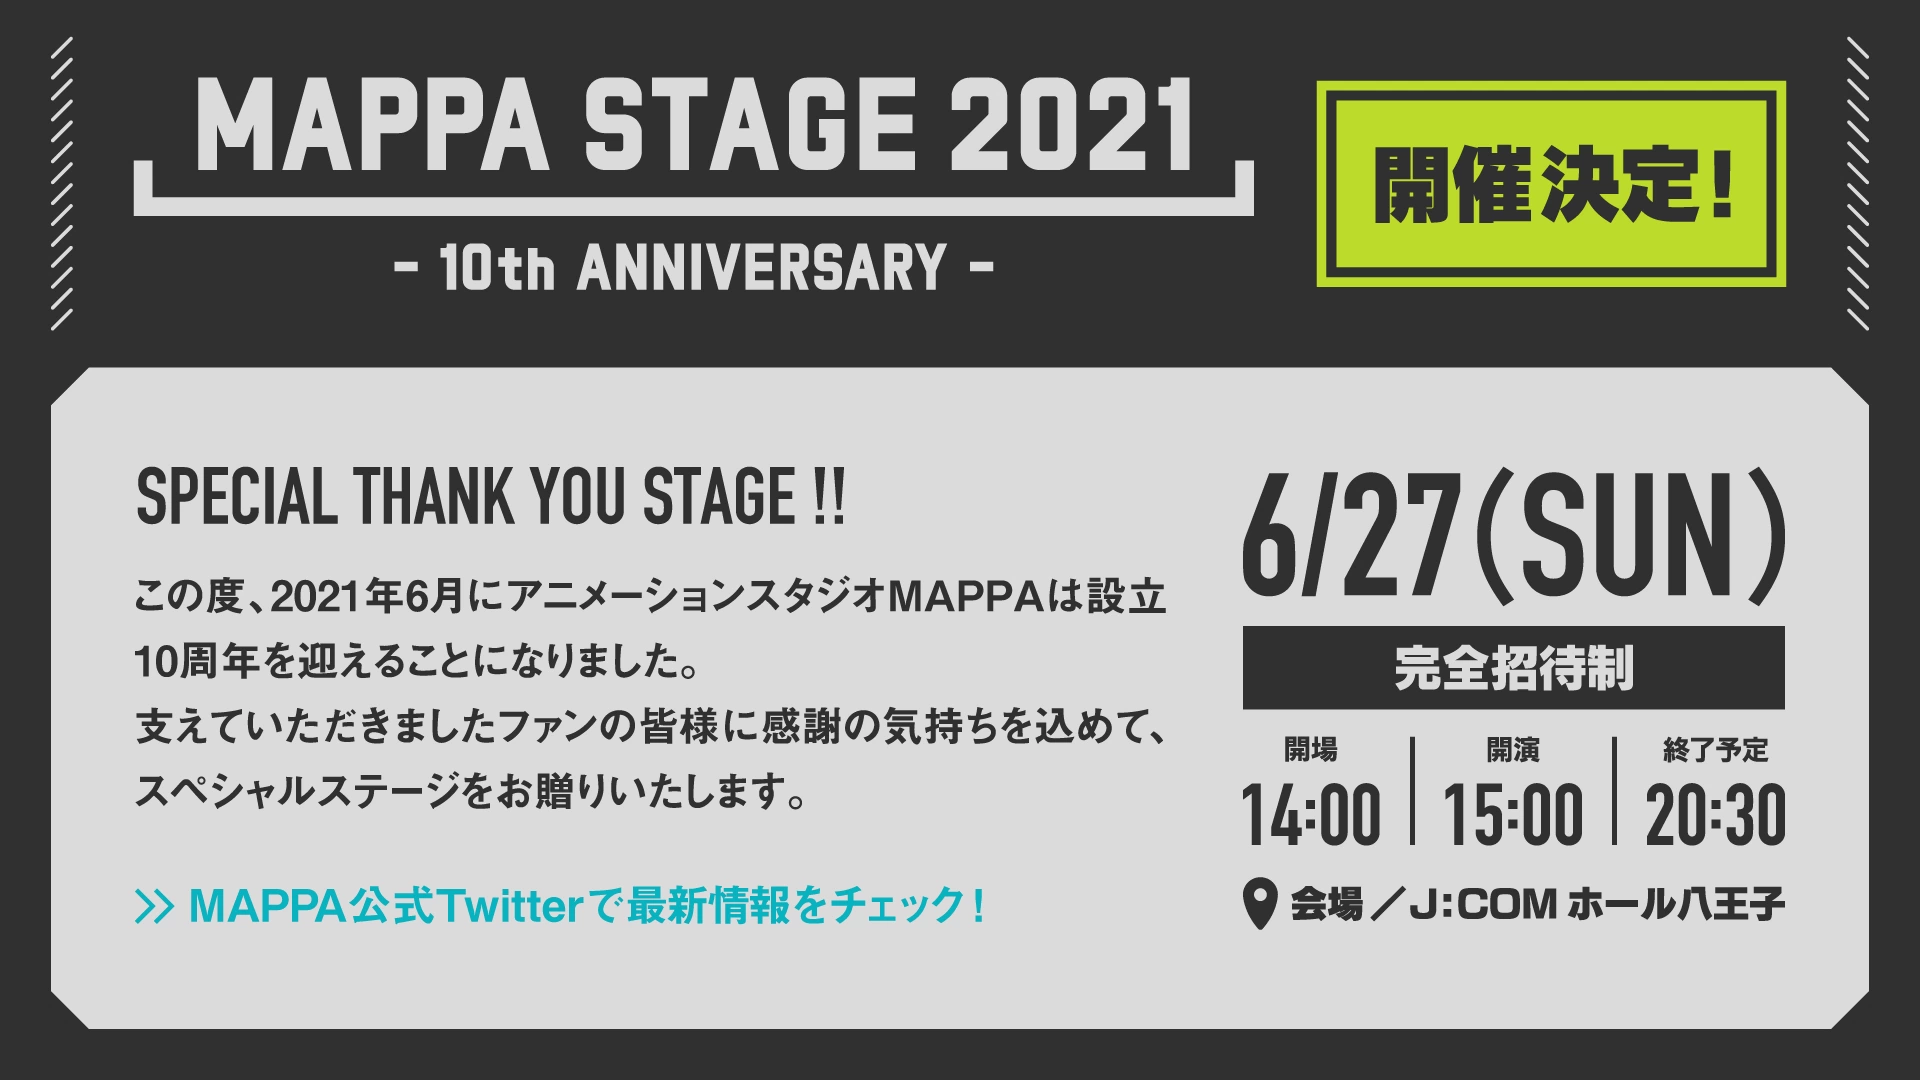 MAPPA STAGE 2021 -10th Anniversary-